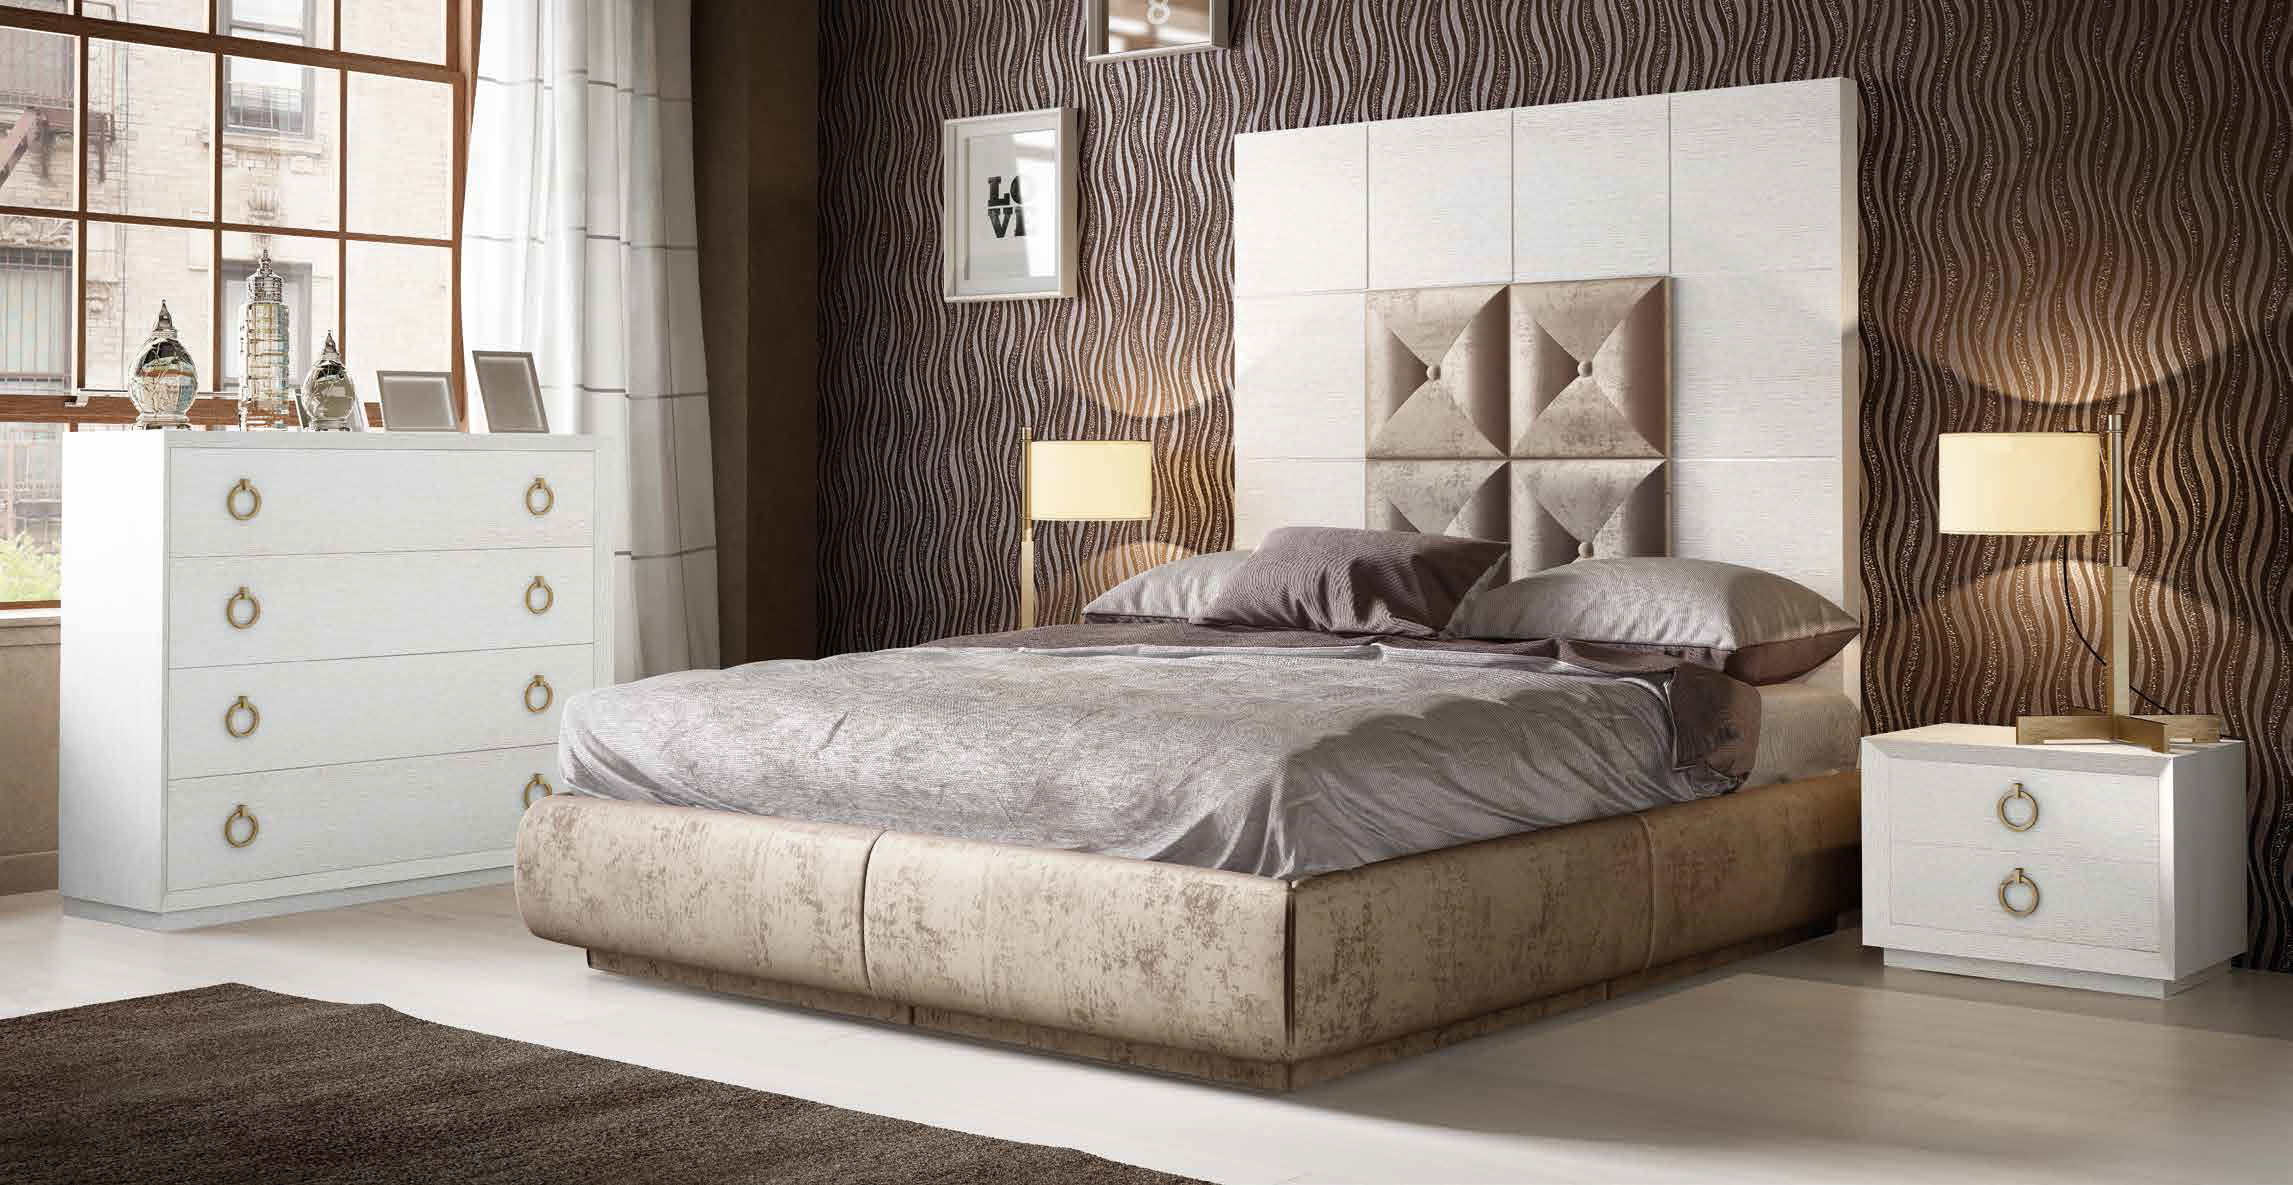 Brands Franco Furniture Bedrooms vol2, Spain DOR 73